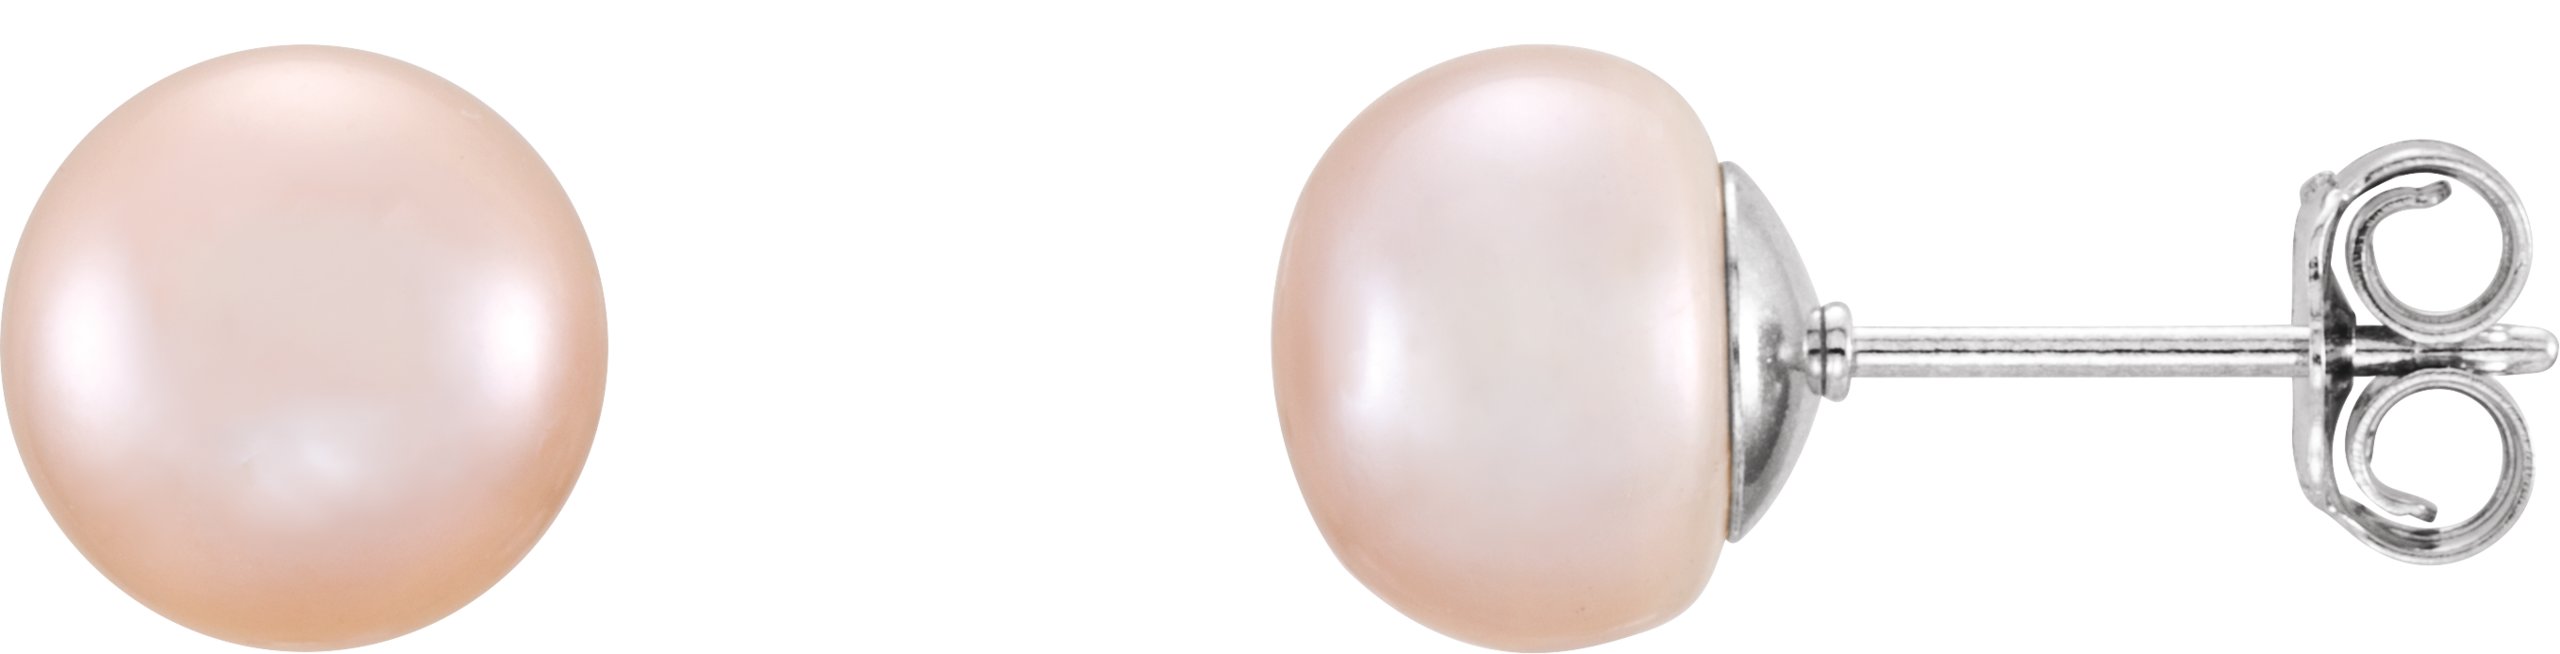 Sterling Silver 7-8 mm Cultured Pink Freshwater Pearl Earrings